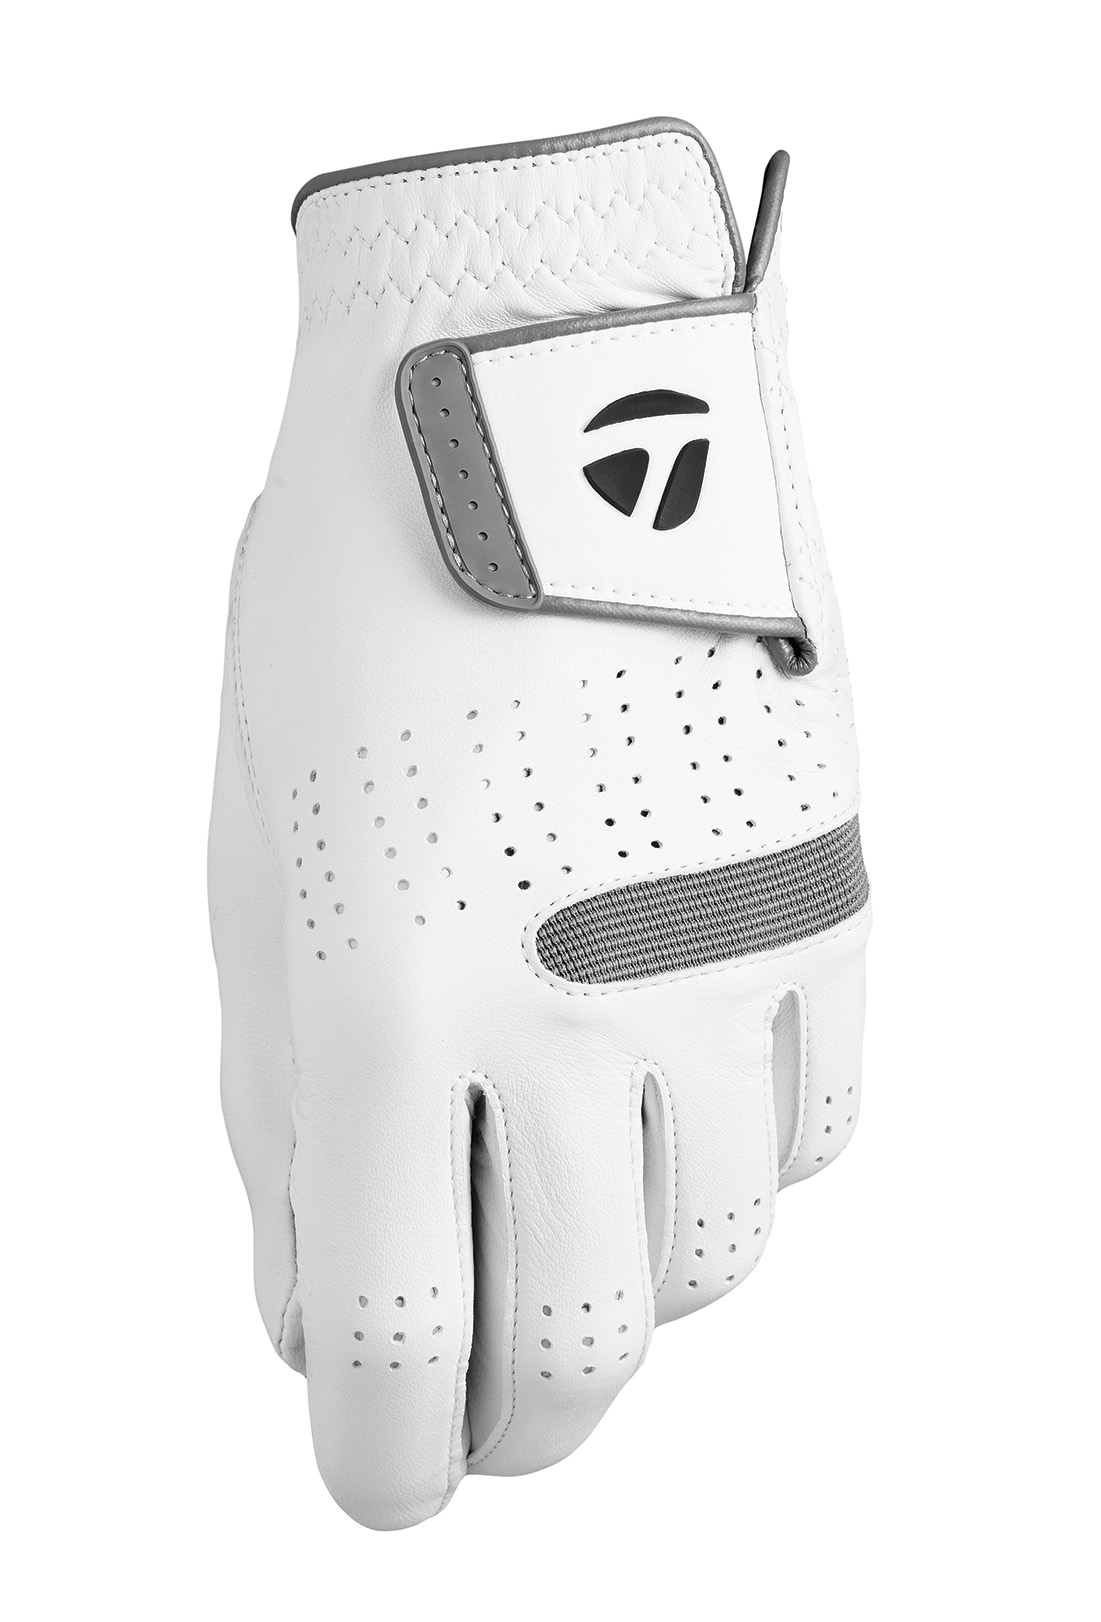 TaylorMade TP Flex Golf Glove, Left Hand, Cadet Large - image 1 of 3